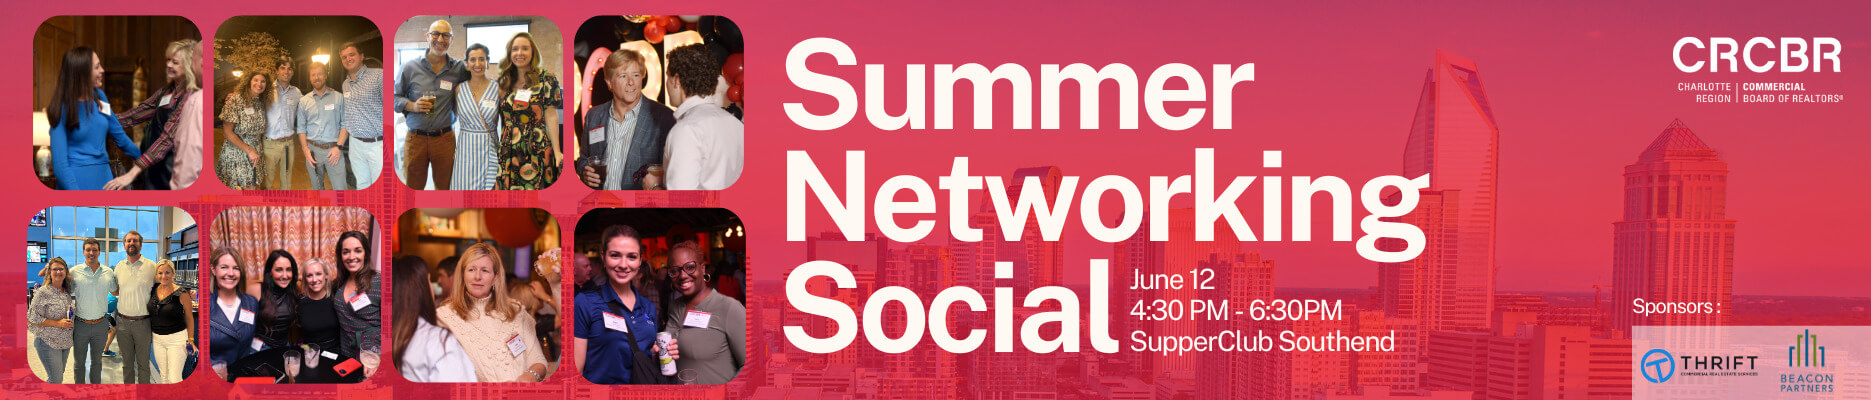 Summer Networking Social